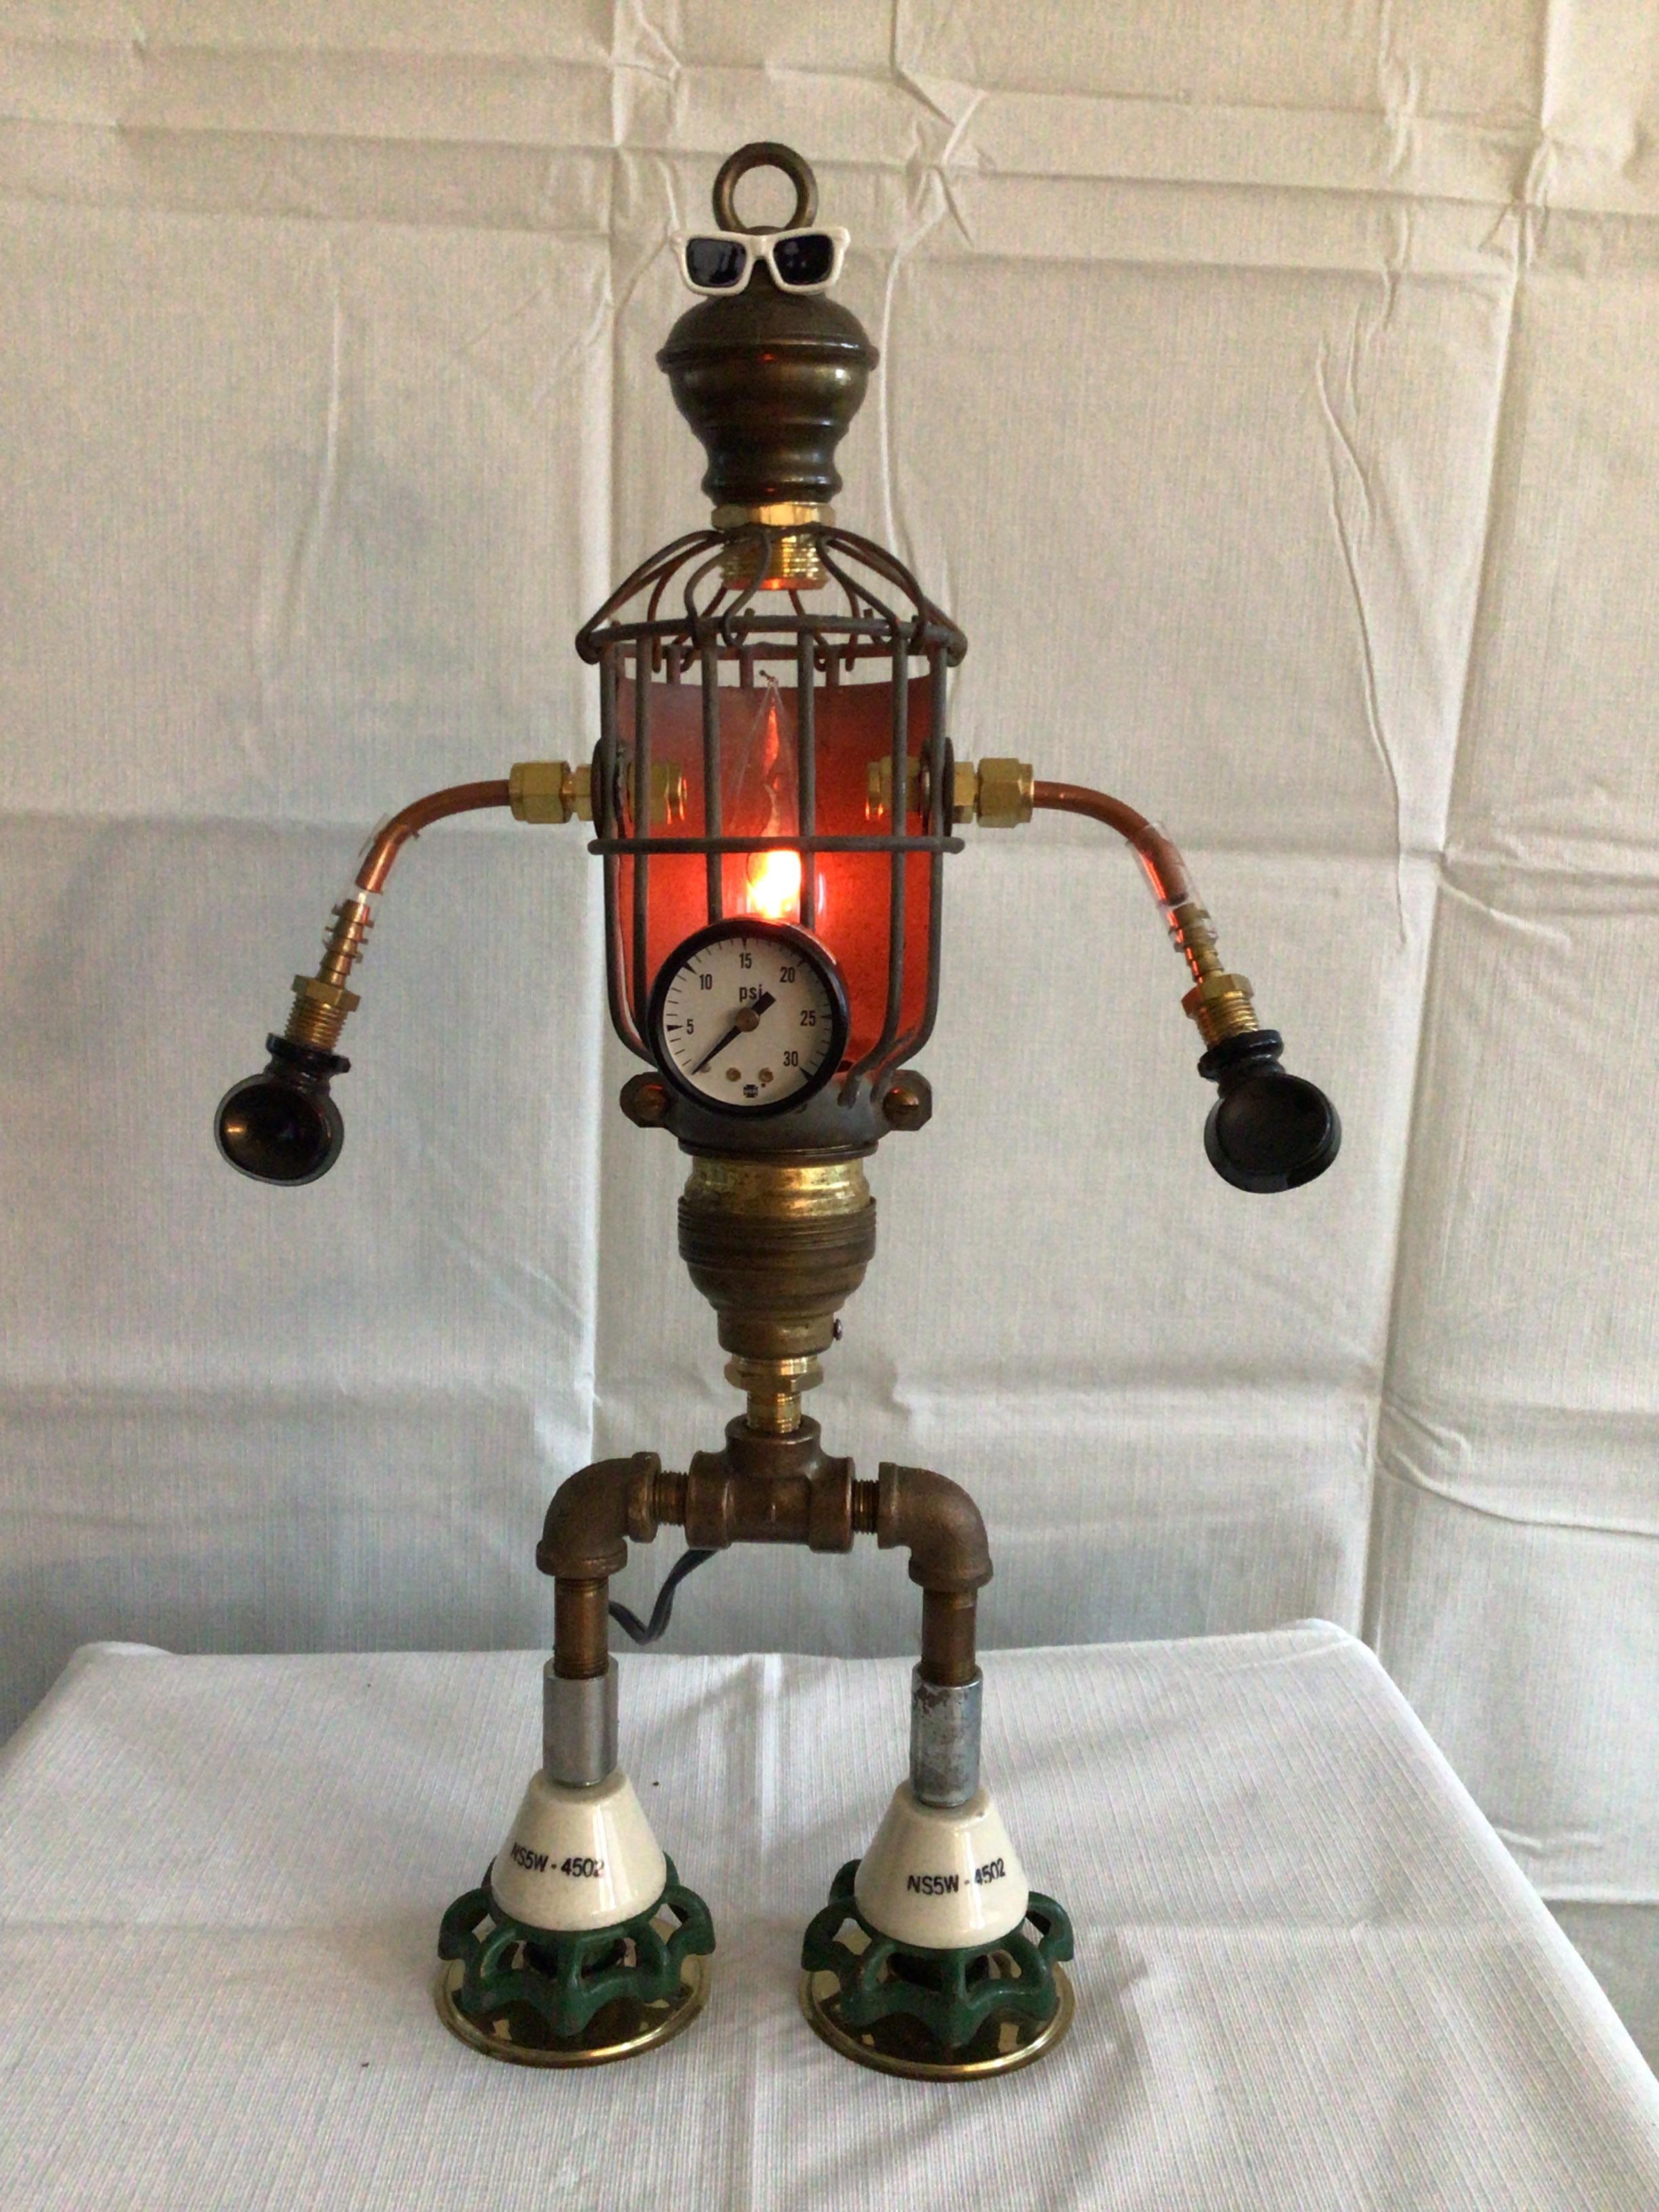 2020 Handmade Industrial Robot with Flickering Light For Sale 8